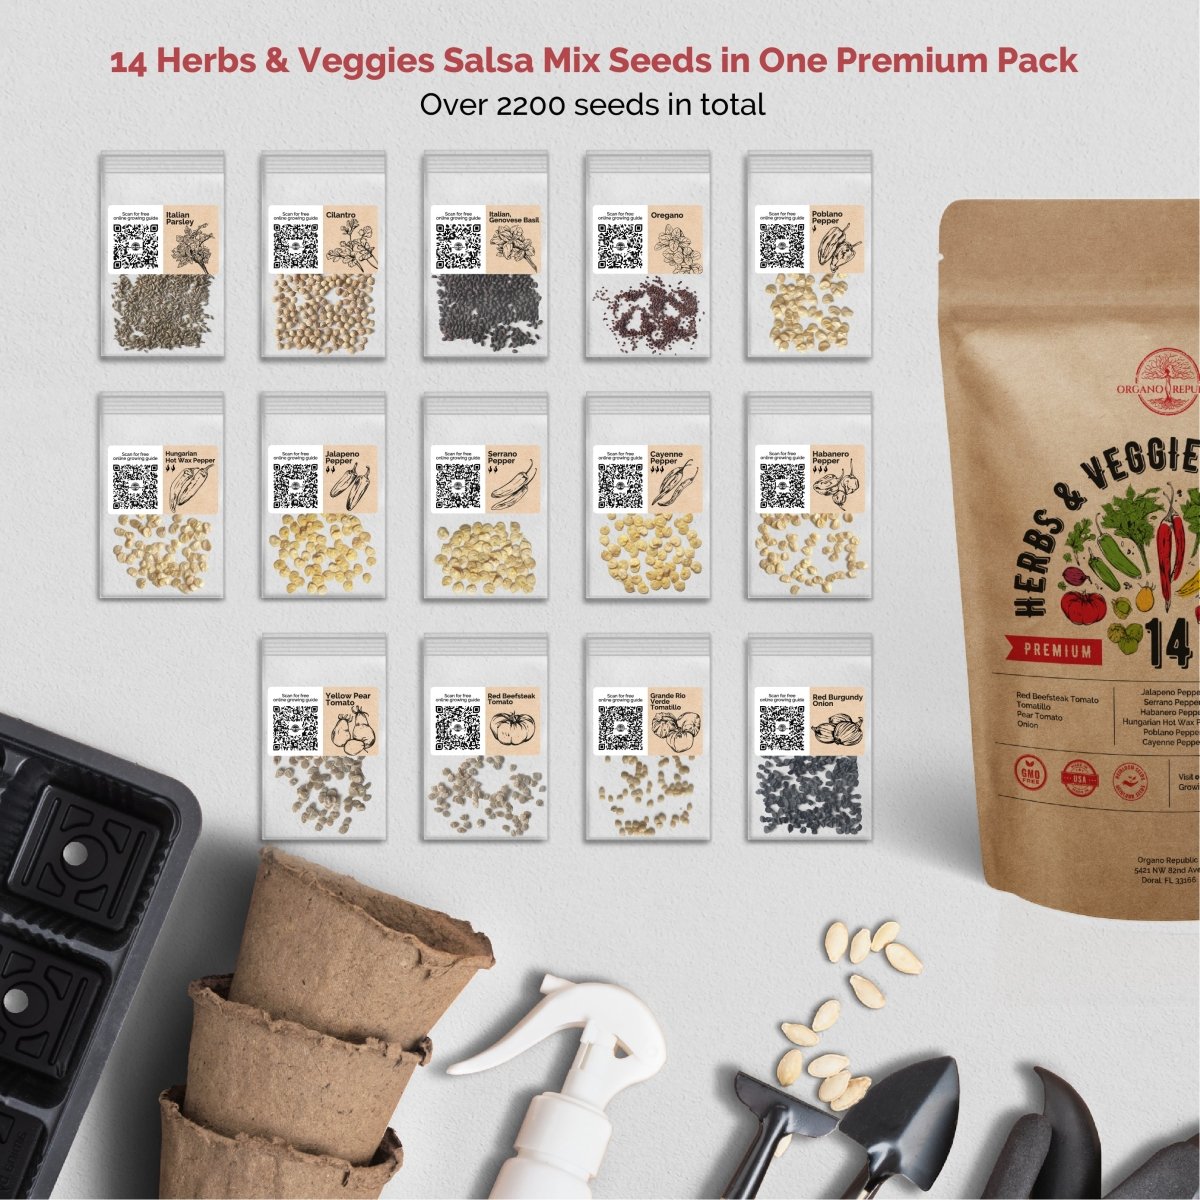 10 Rare Beet & 14 Salsa Mix Seeds Variety Packs Bundle - Organo Republic